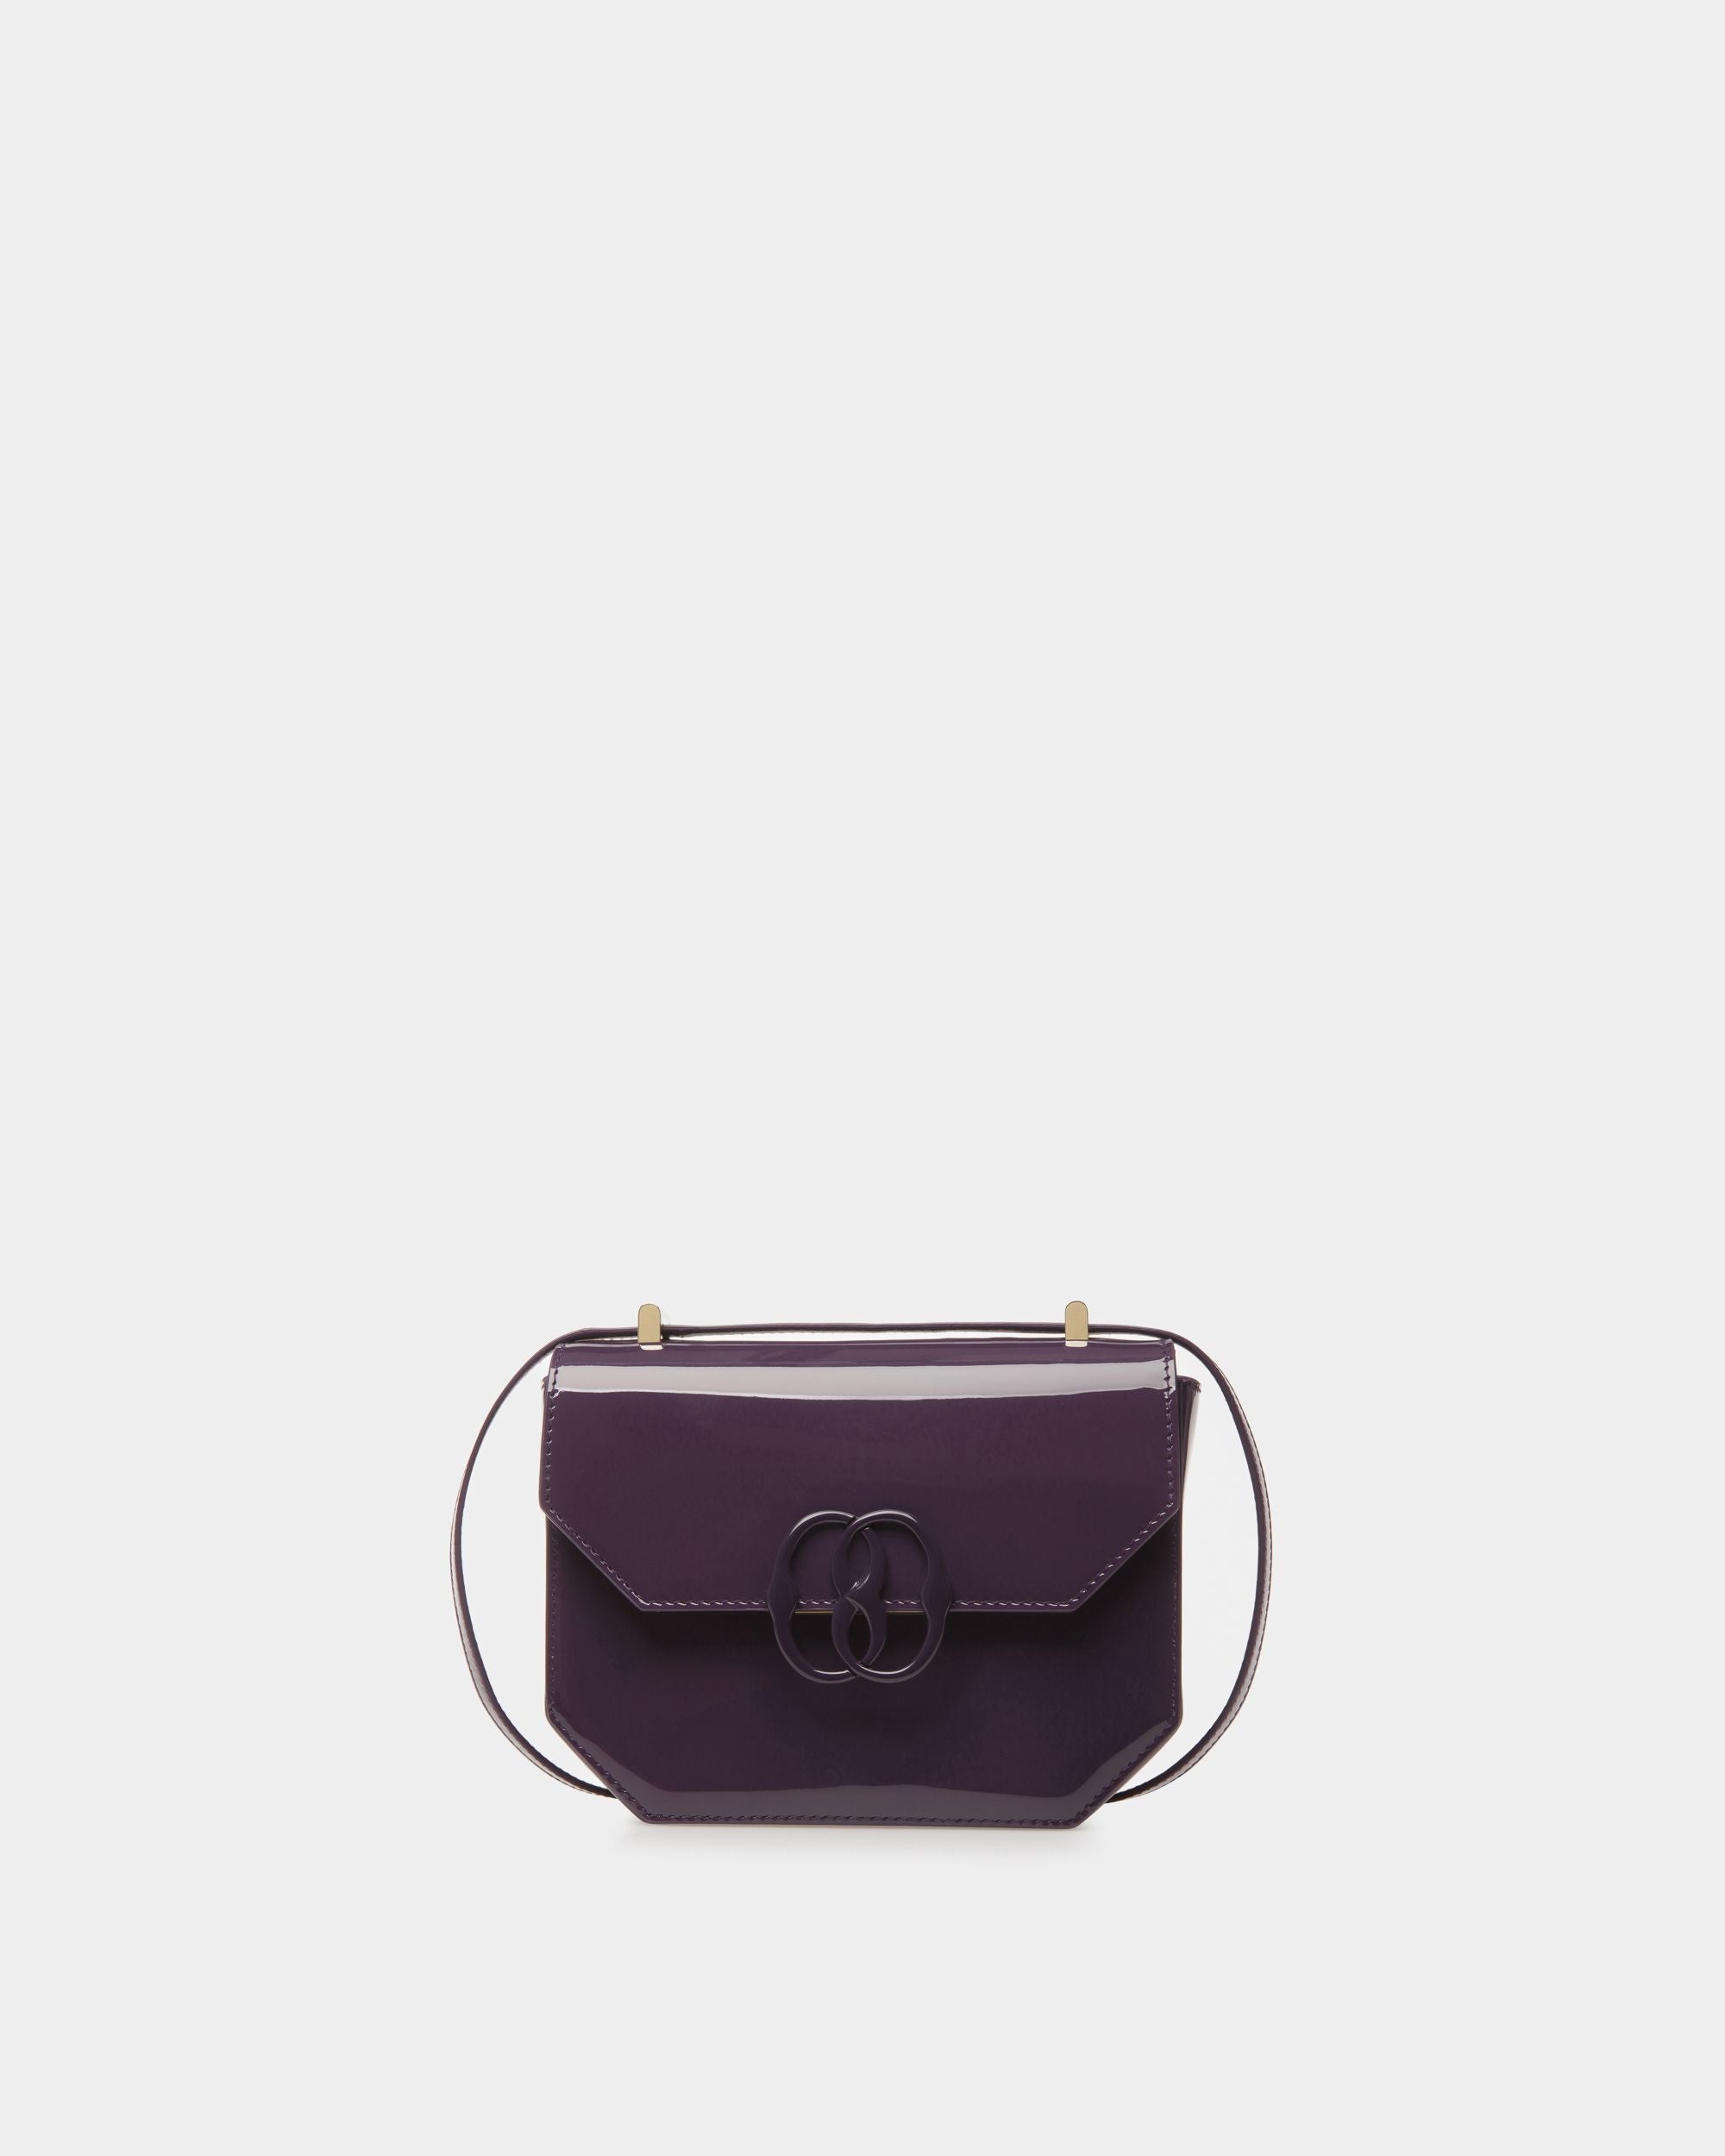 Emblem Folio | Women's Minibag | Orchid Leather | Bally | Still Life Front